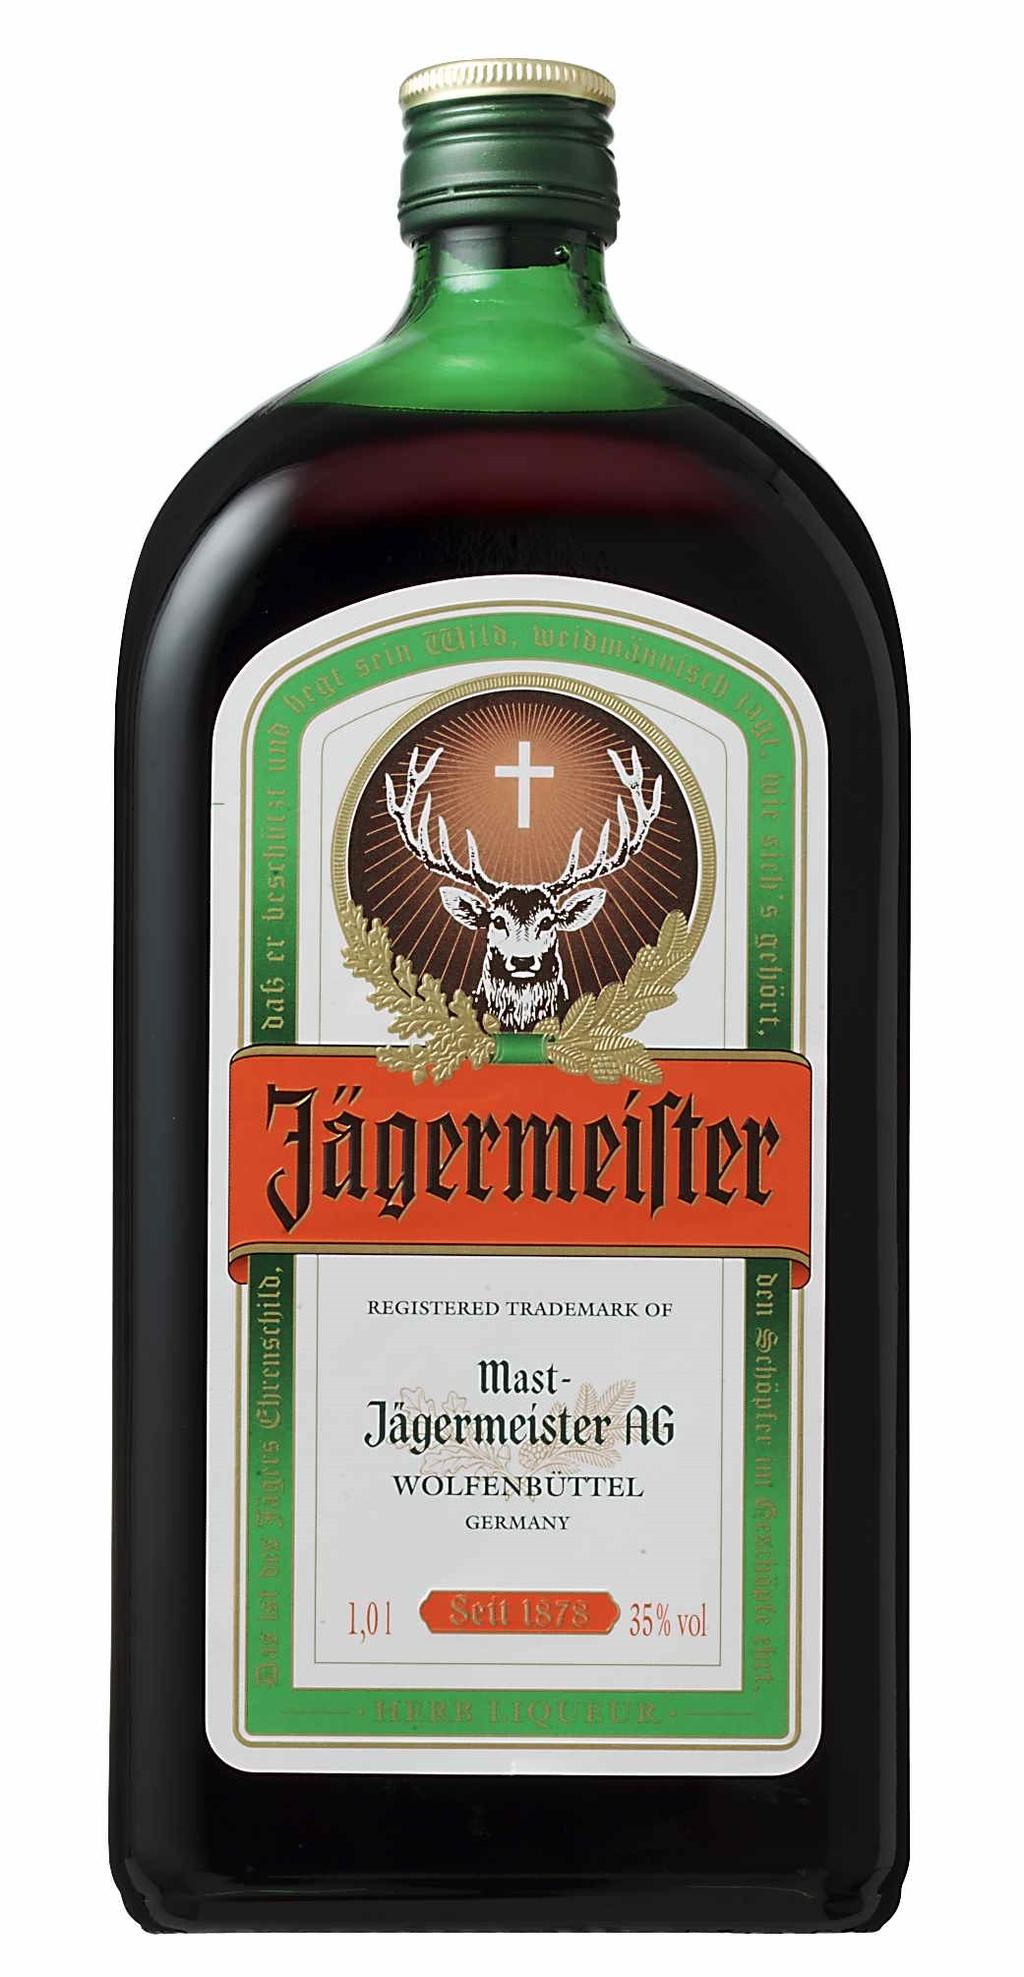 Beer Mix Radler - Beer mix with 7 up Gasoline - Beer mix with Coke 6.50 6.50 German Spirits and Liqueurs Jägermeister Obstler Schnapps Kirschwasser Schnapps Underberg Asbach Uralt Weinbrand shot 4.